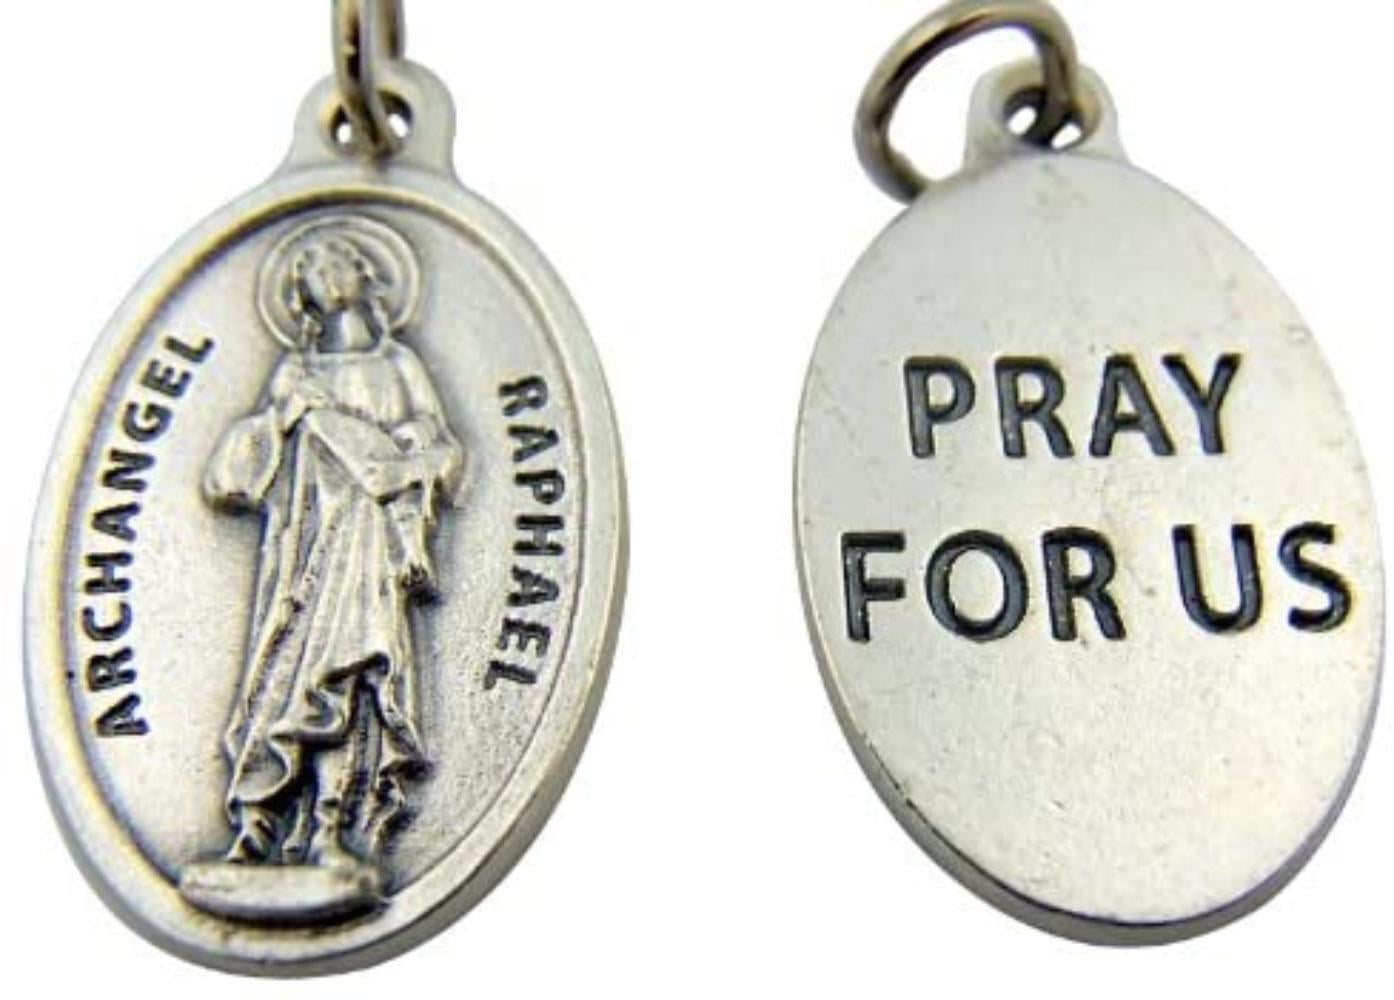 1 Inch Silver Toned Base Archangel Saint Raphael Pray for Us Medal Pendant